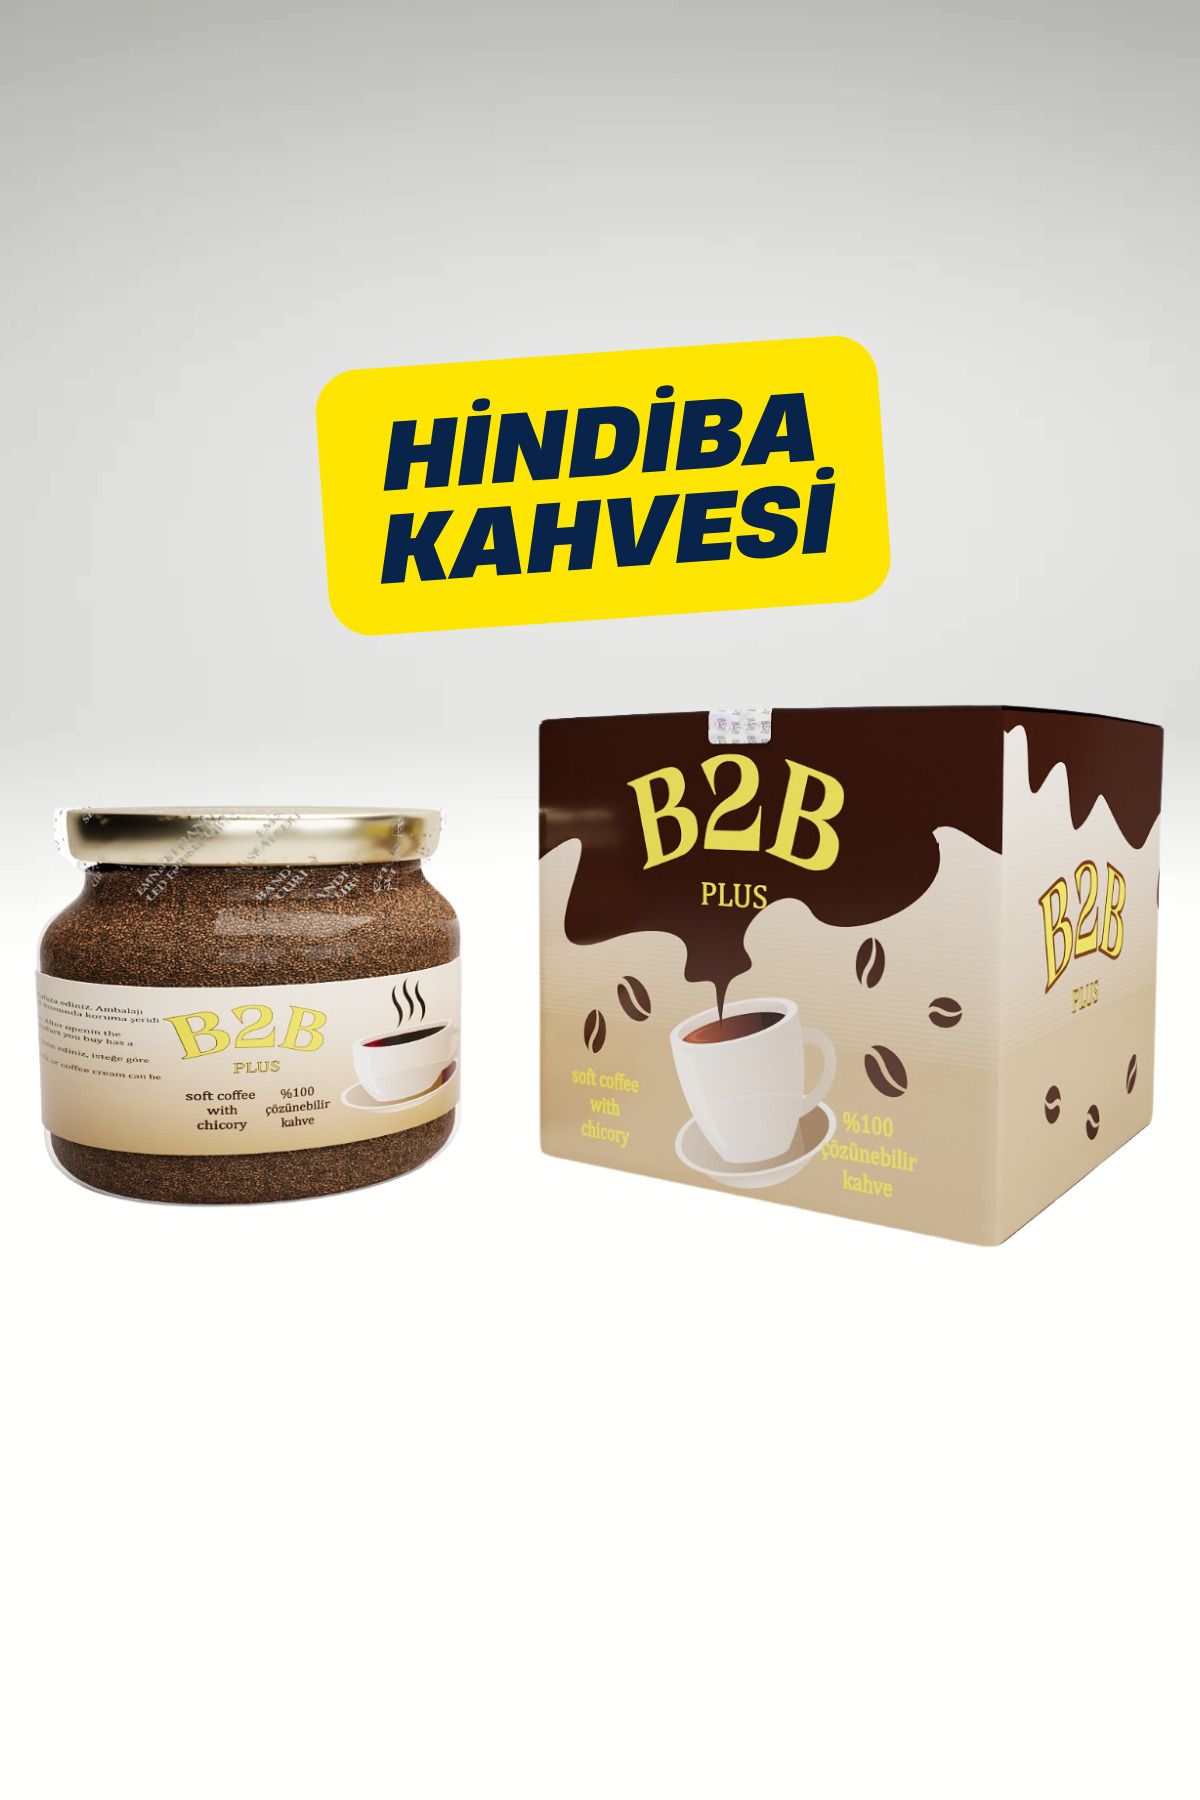 B2B Plus Hindiba Kahvesi | Detox Kahvesi | 150 gram